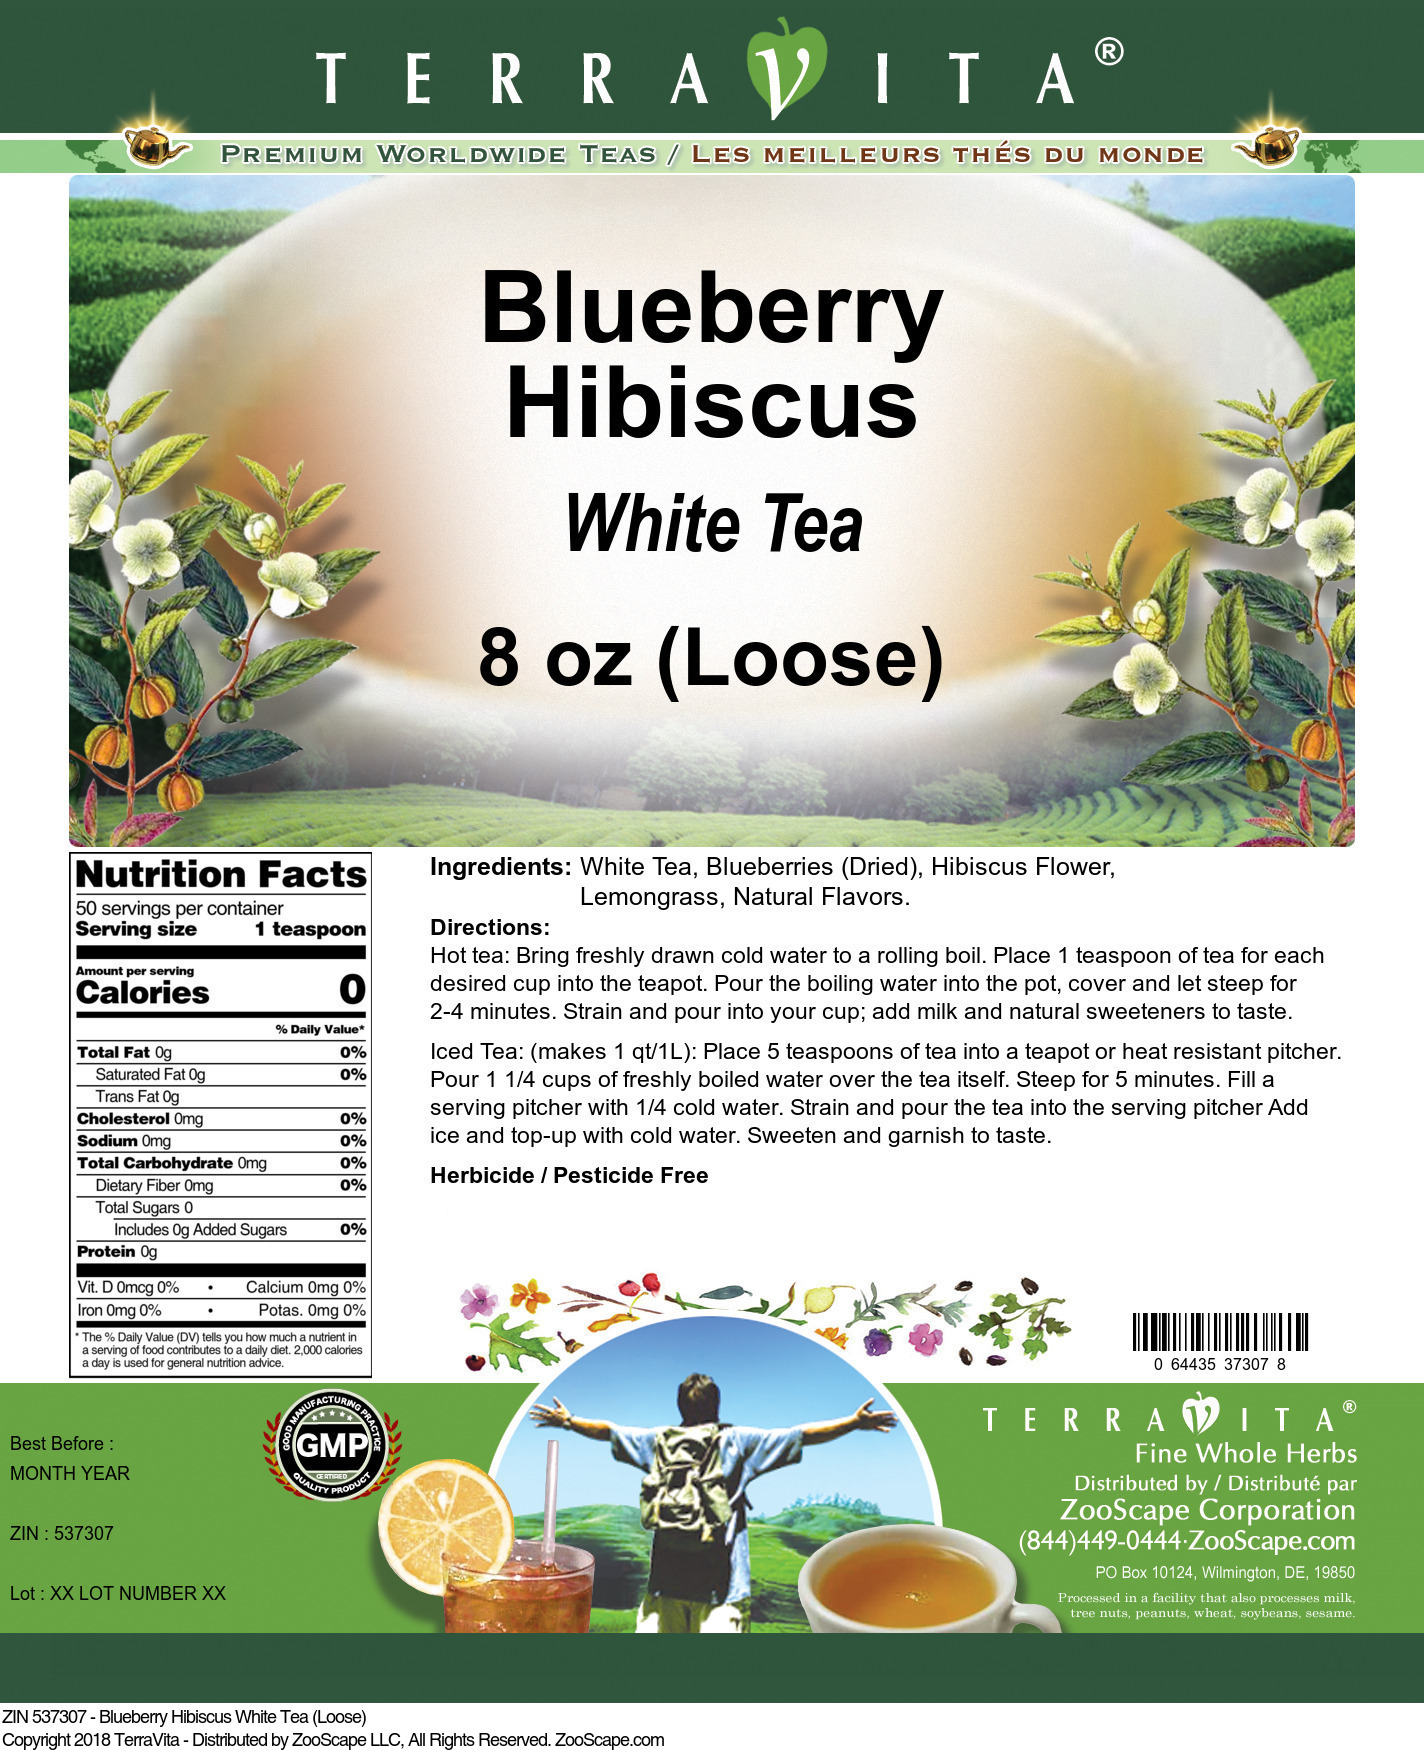 Blueberry Hibiscus White Tea (Loose) - Label